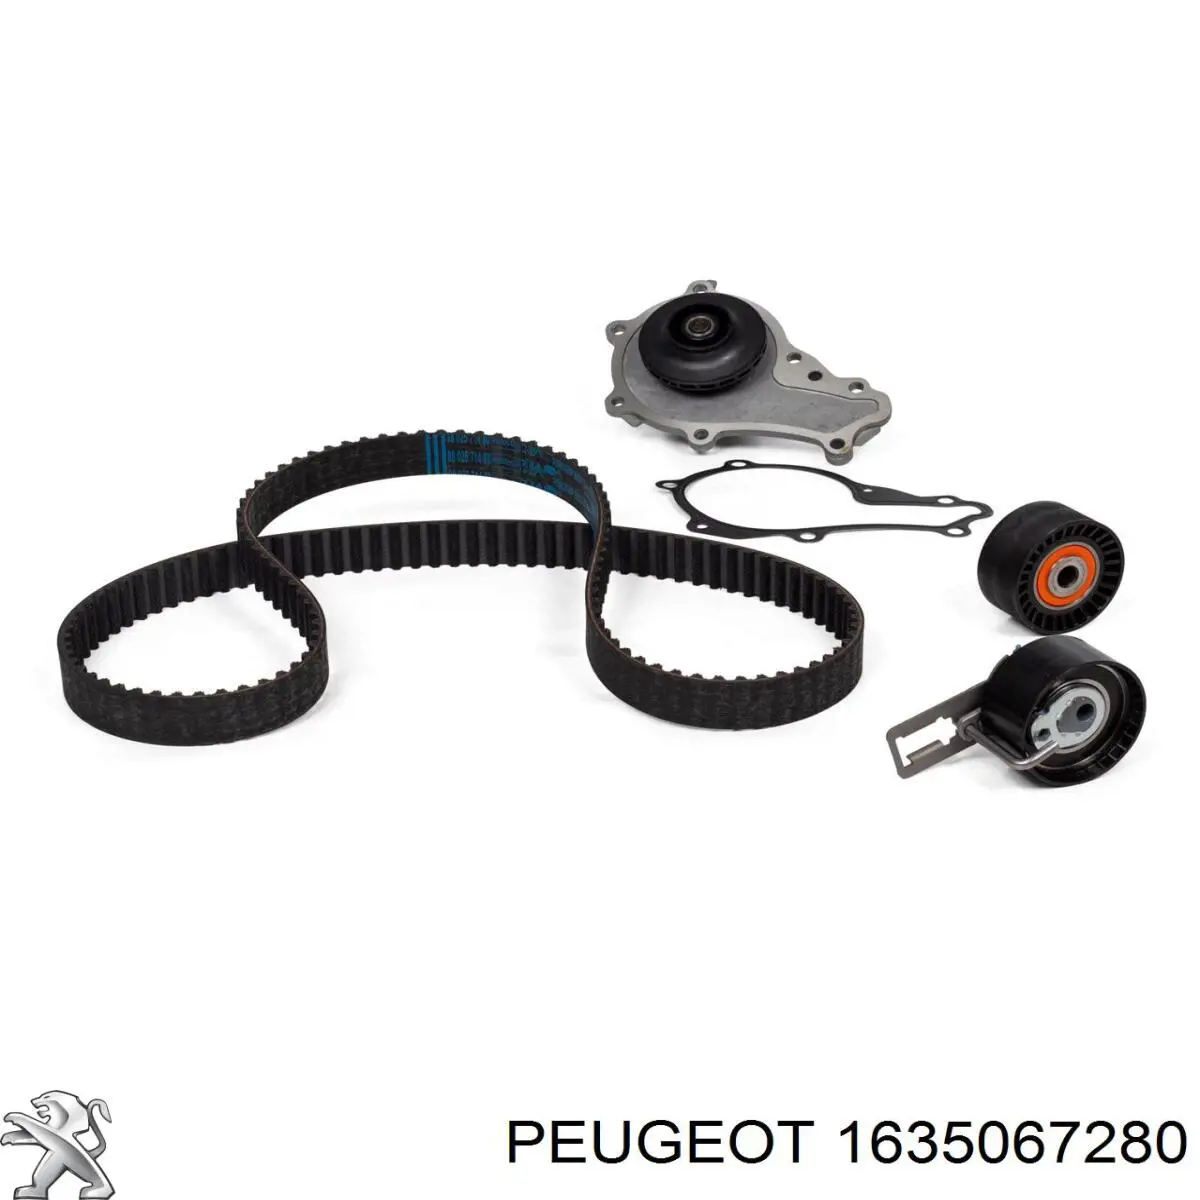 1635067280 Peugeot/Citroen kit de correa de distribución